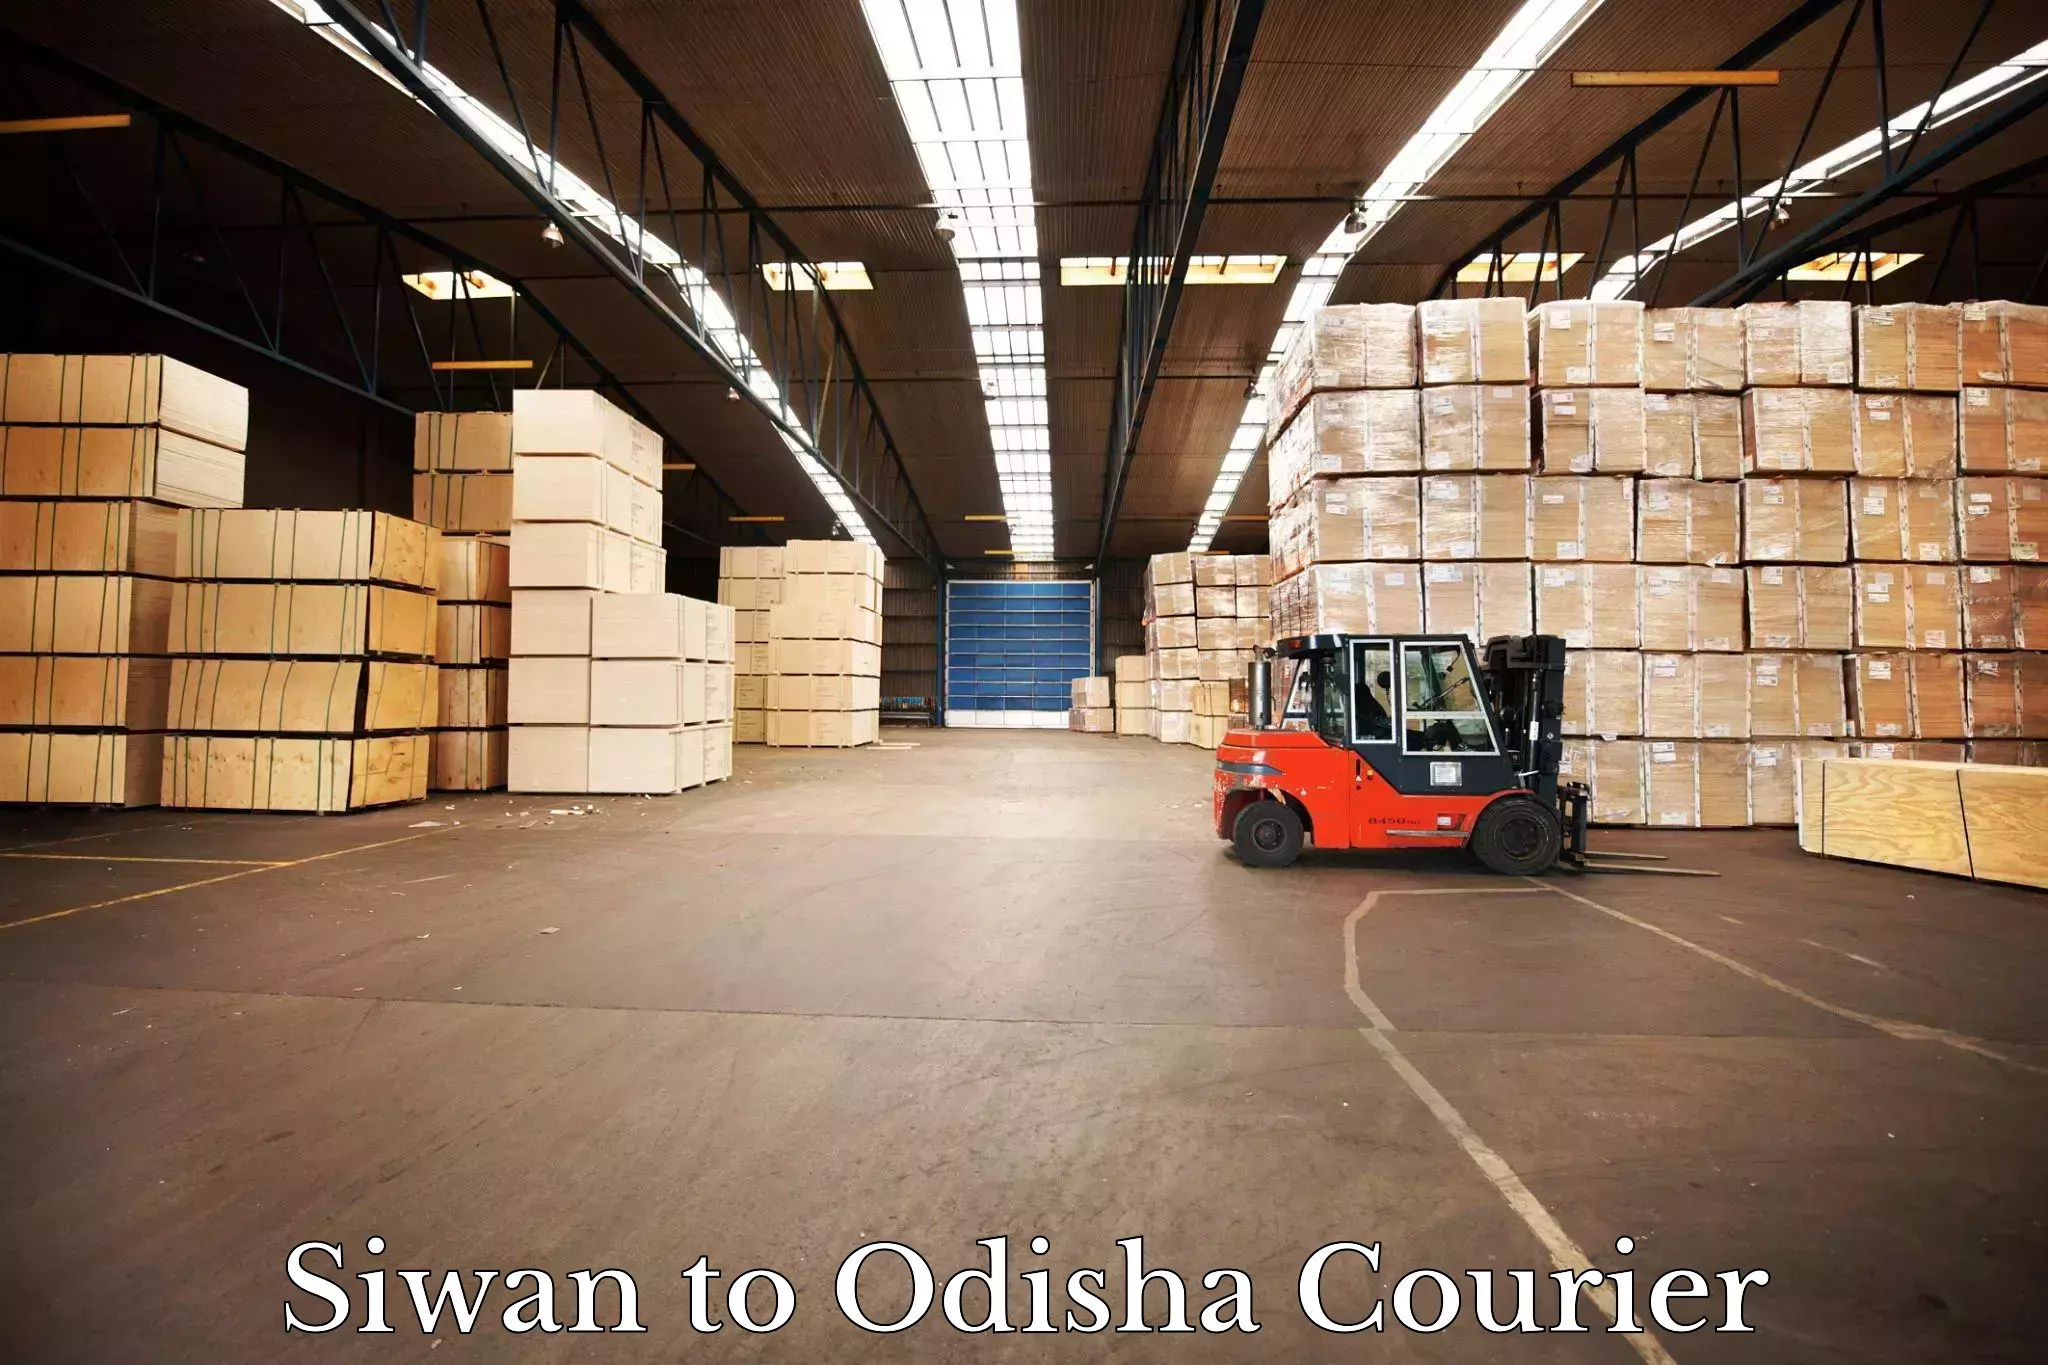 Nationwide courier service Siwan to Odisha